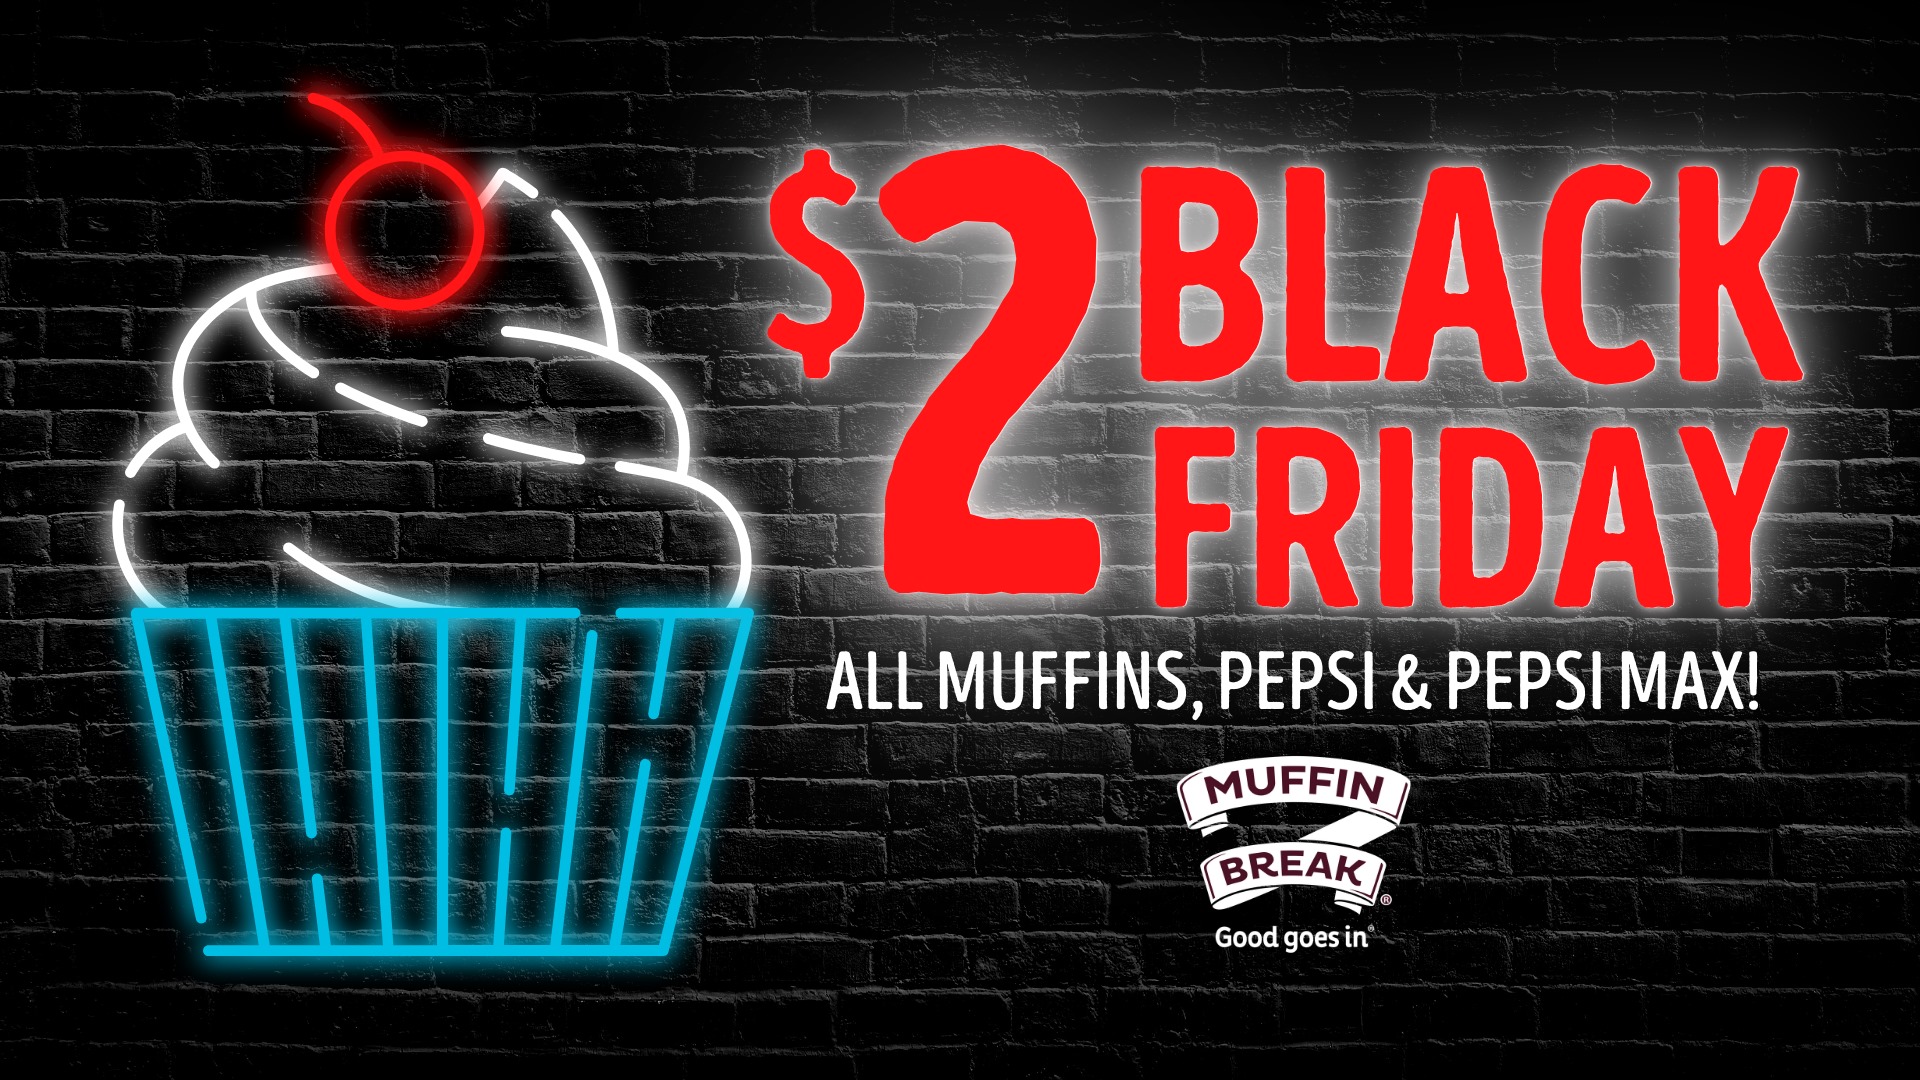 DEAL: Muffin Break - $2 Muffins, Pepsi & Pepsi Max on Black Friday 27 November 2020 4